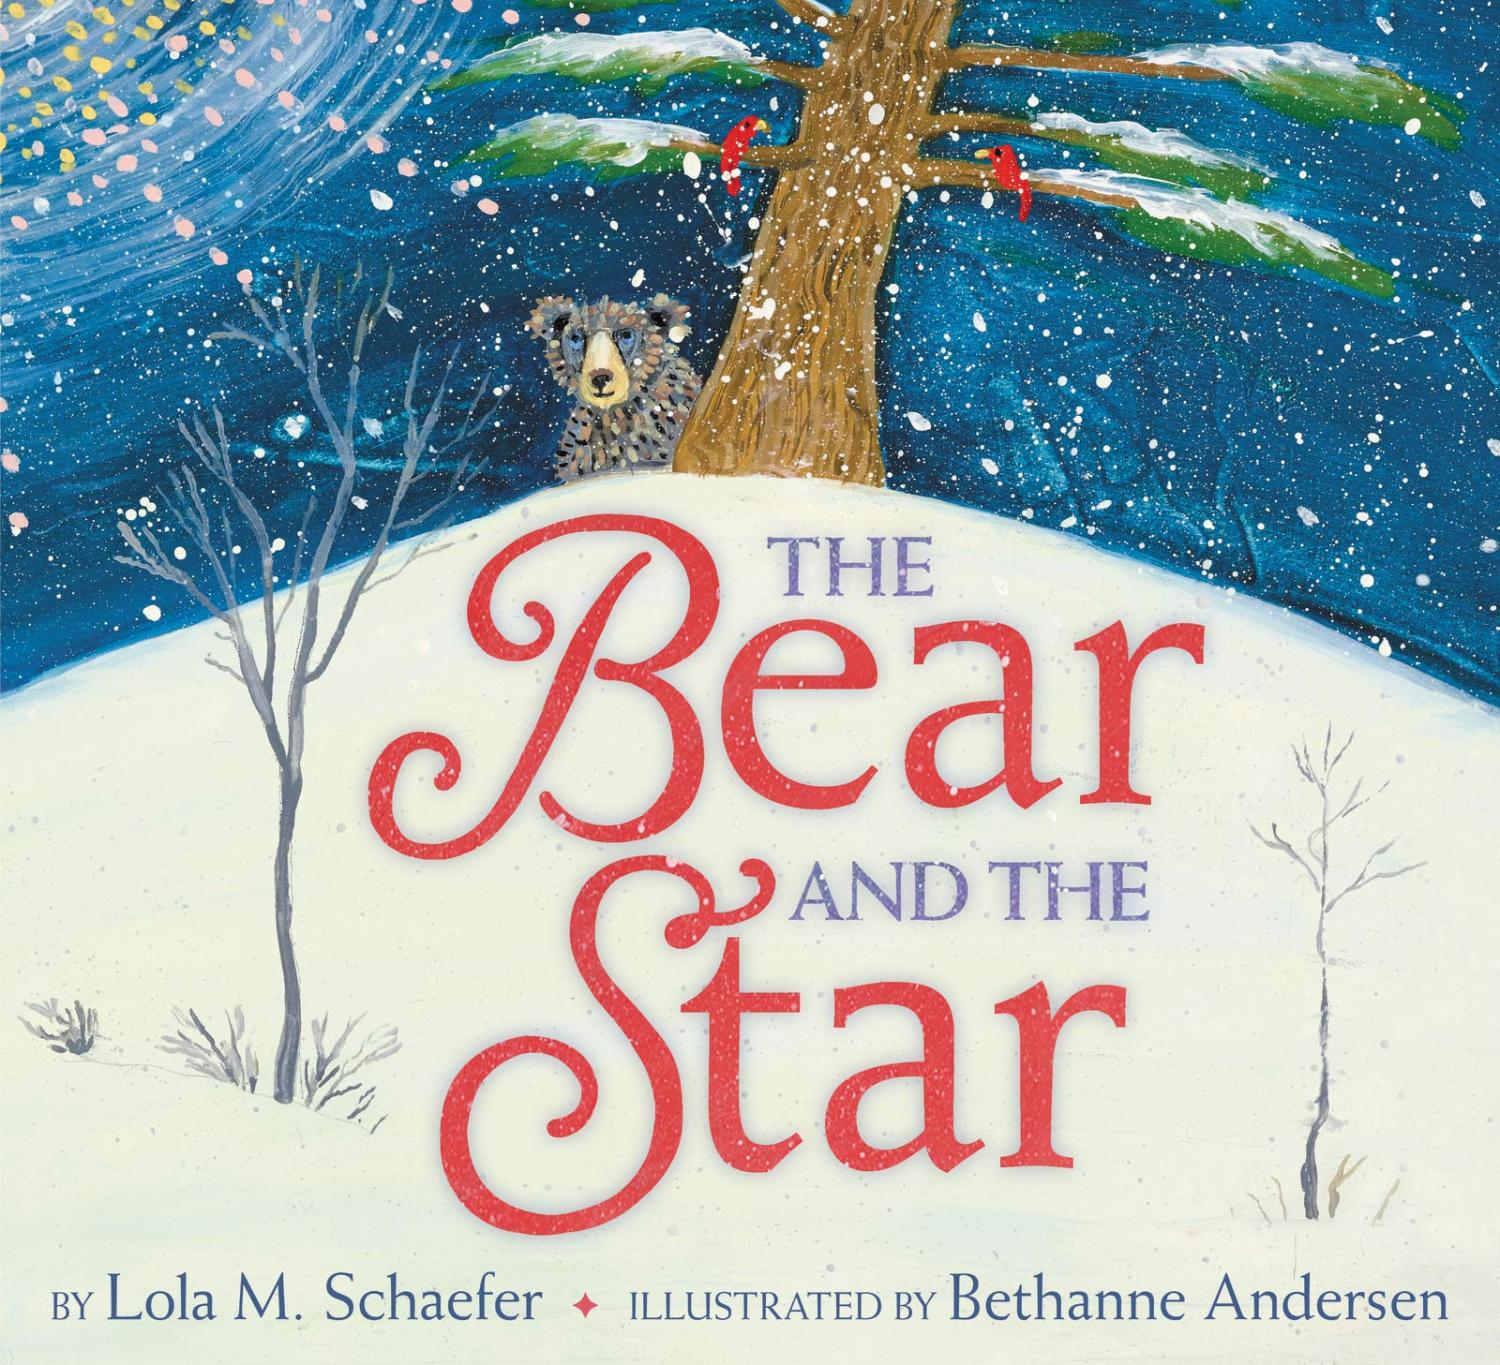 A bear peeking out of tree on a snowy hill, stars fill the night sky